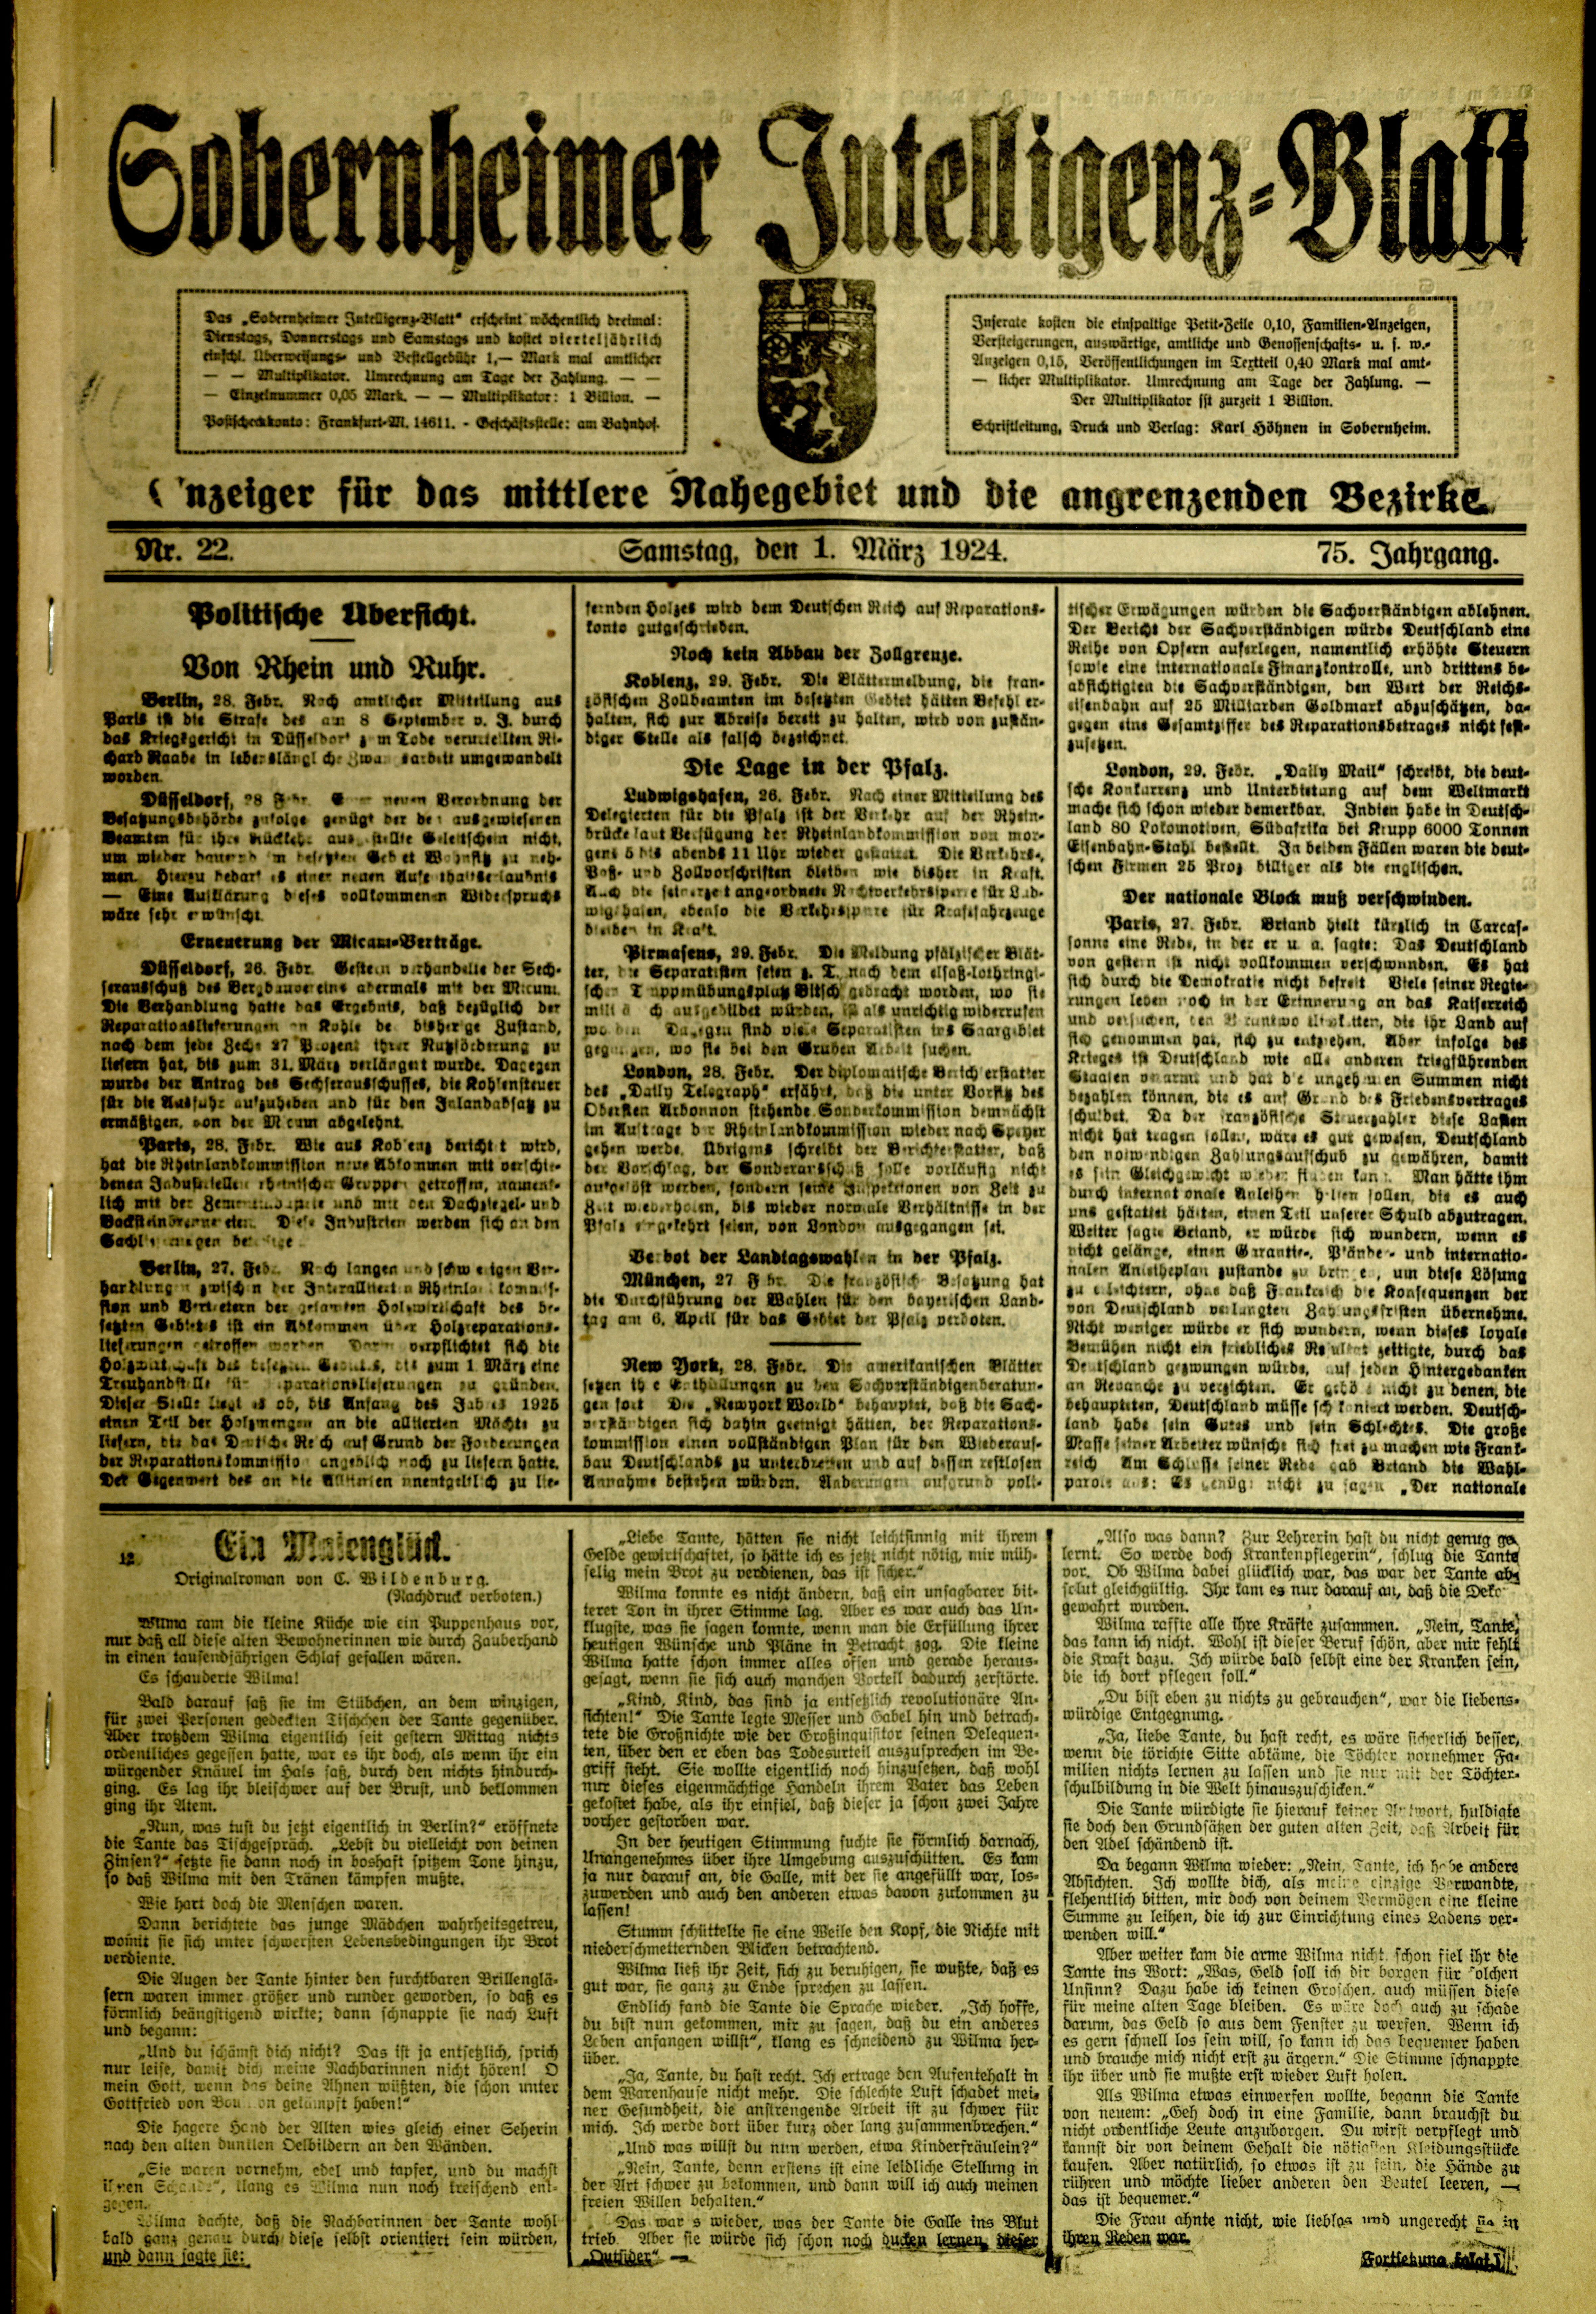 Zeitung: Sobernheimer Intelligenzblatt; März 1924, Jg. 73 Nr. 22 (Heimatmuseum Bad Sobernheim CC BY-NC-SA)